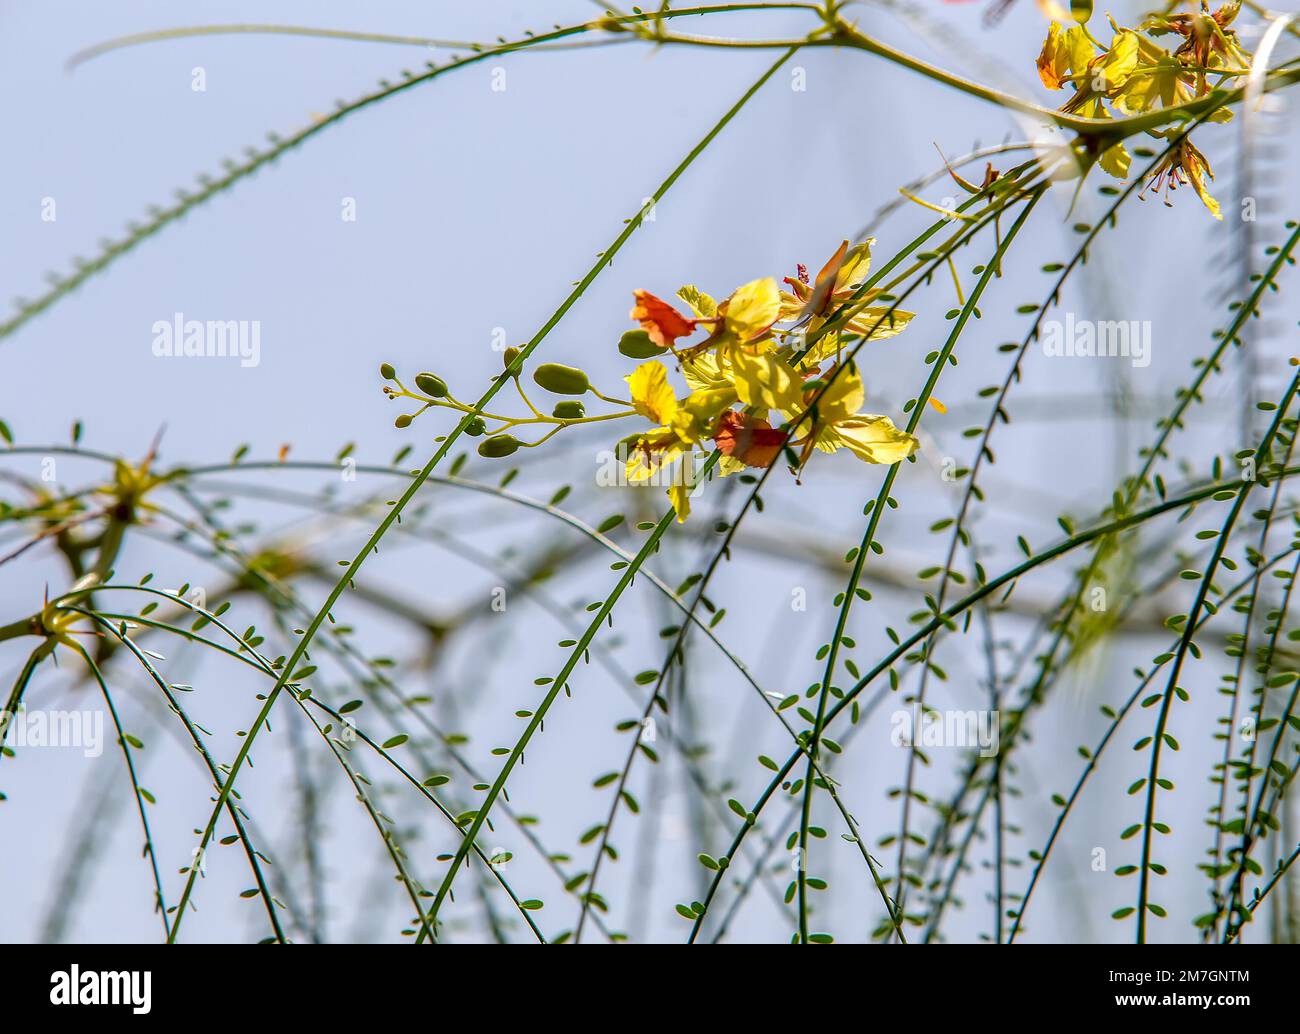 Erythrostemon gilliesii  (legume family)  with yellow flowers  on bush (tree) in Sicily on villa Casa cuseni in Taormina in September Stock Photo